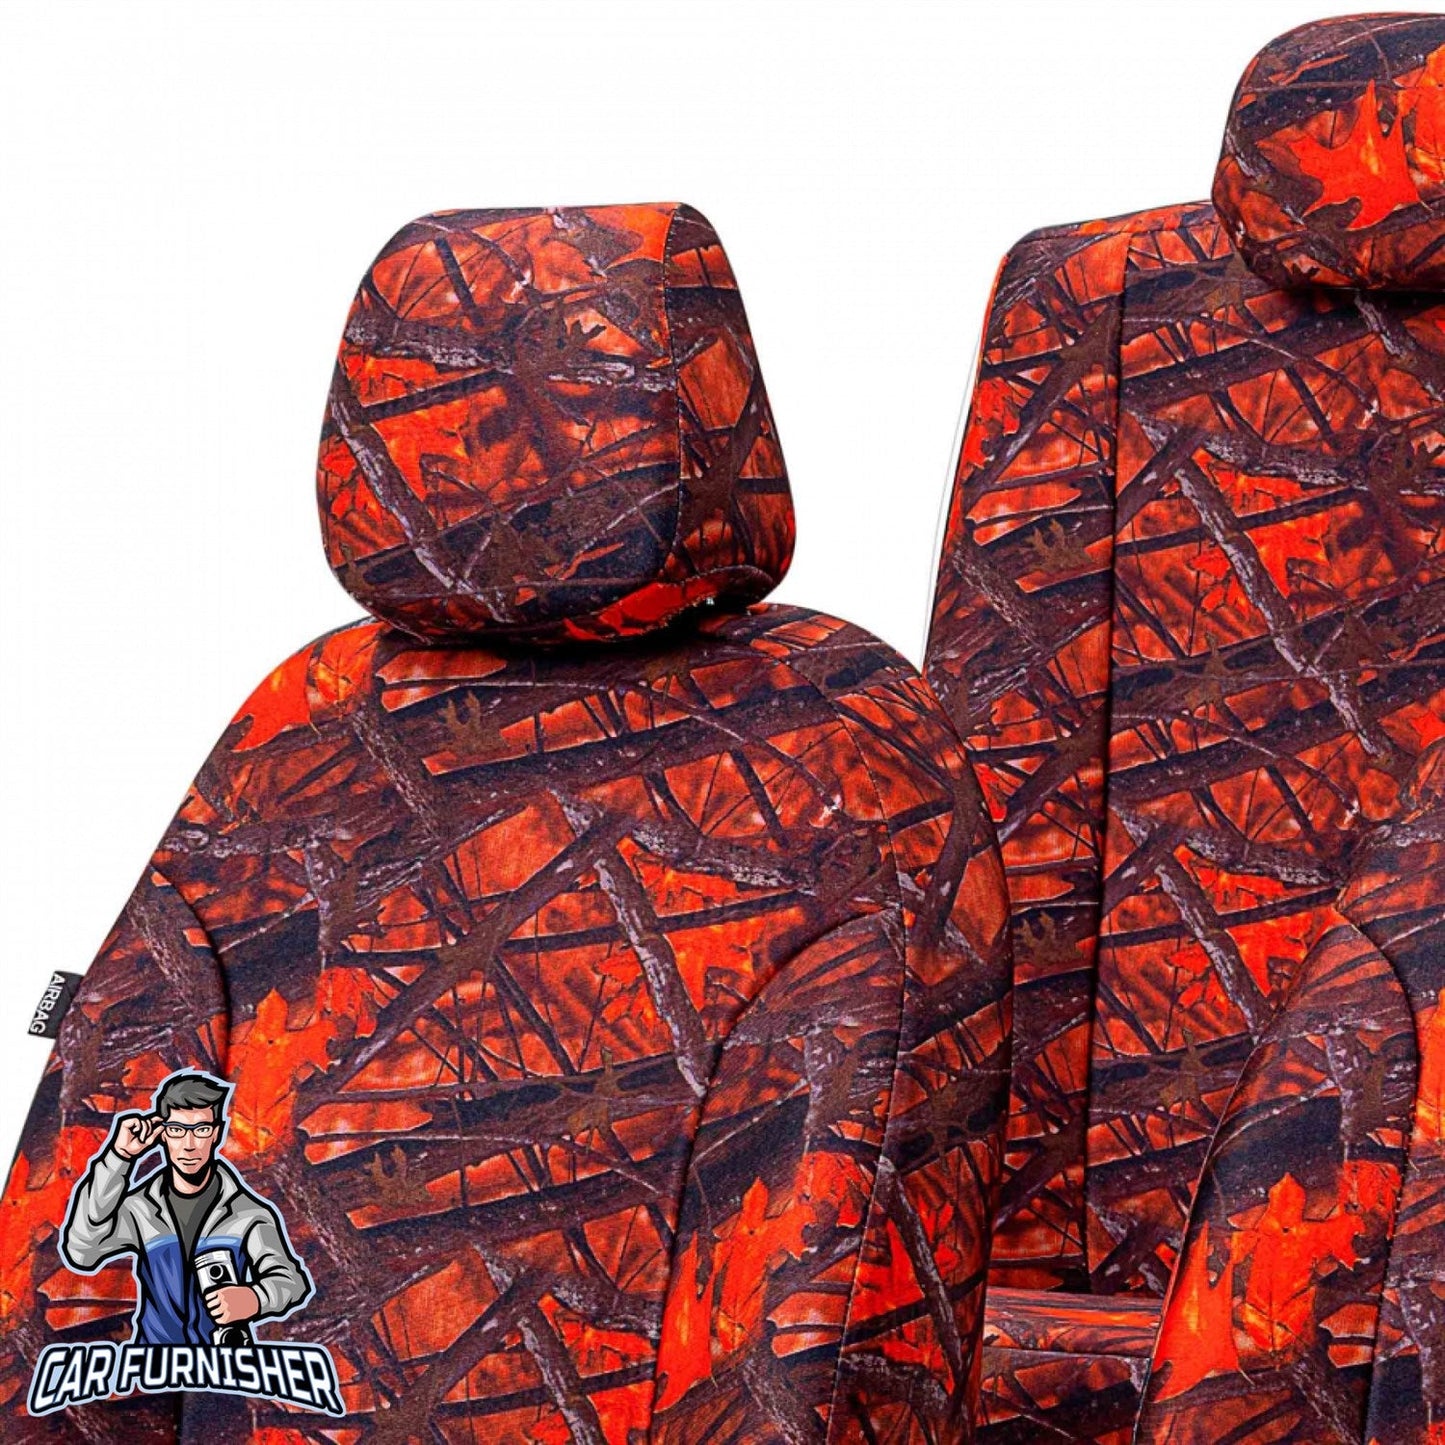 Mercedes Vito Seat Covers Camouflage Waterproof Design Sahara Camo Waterproof Fabric